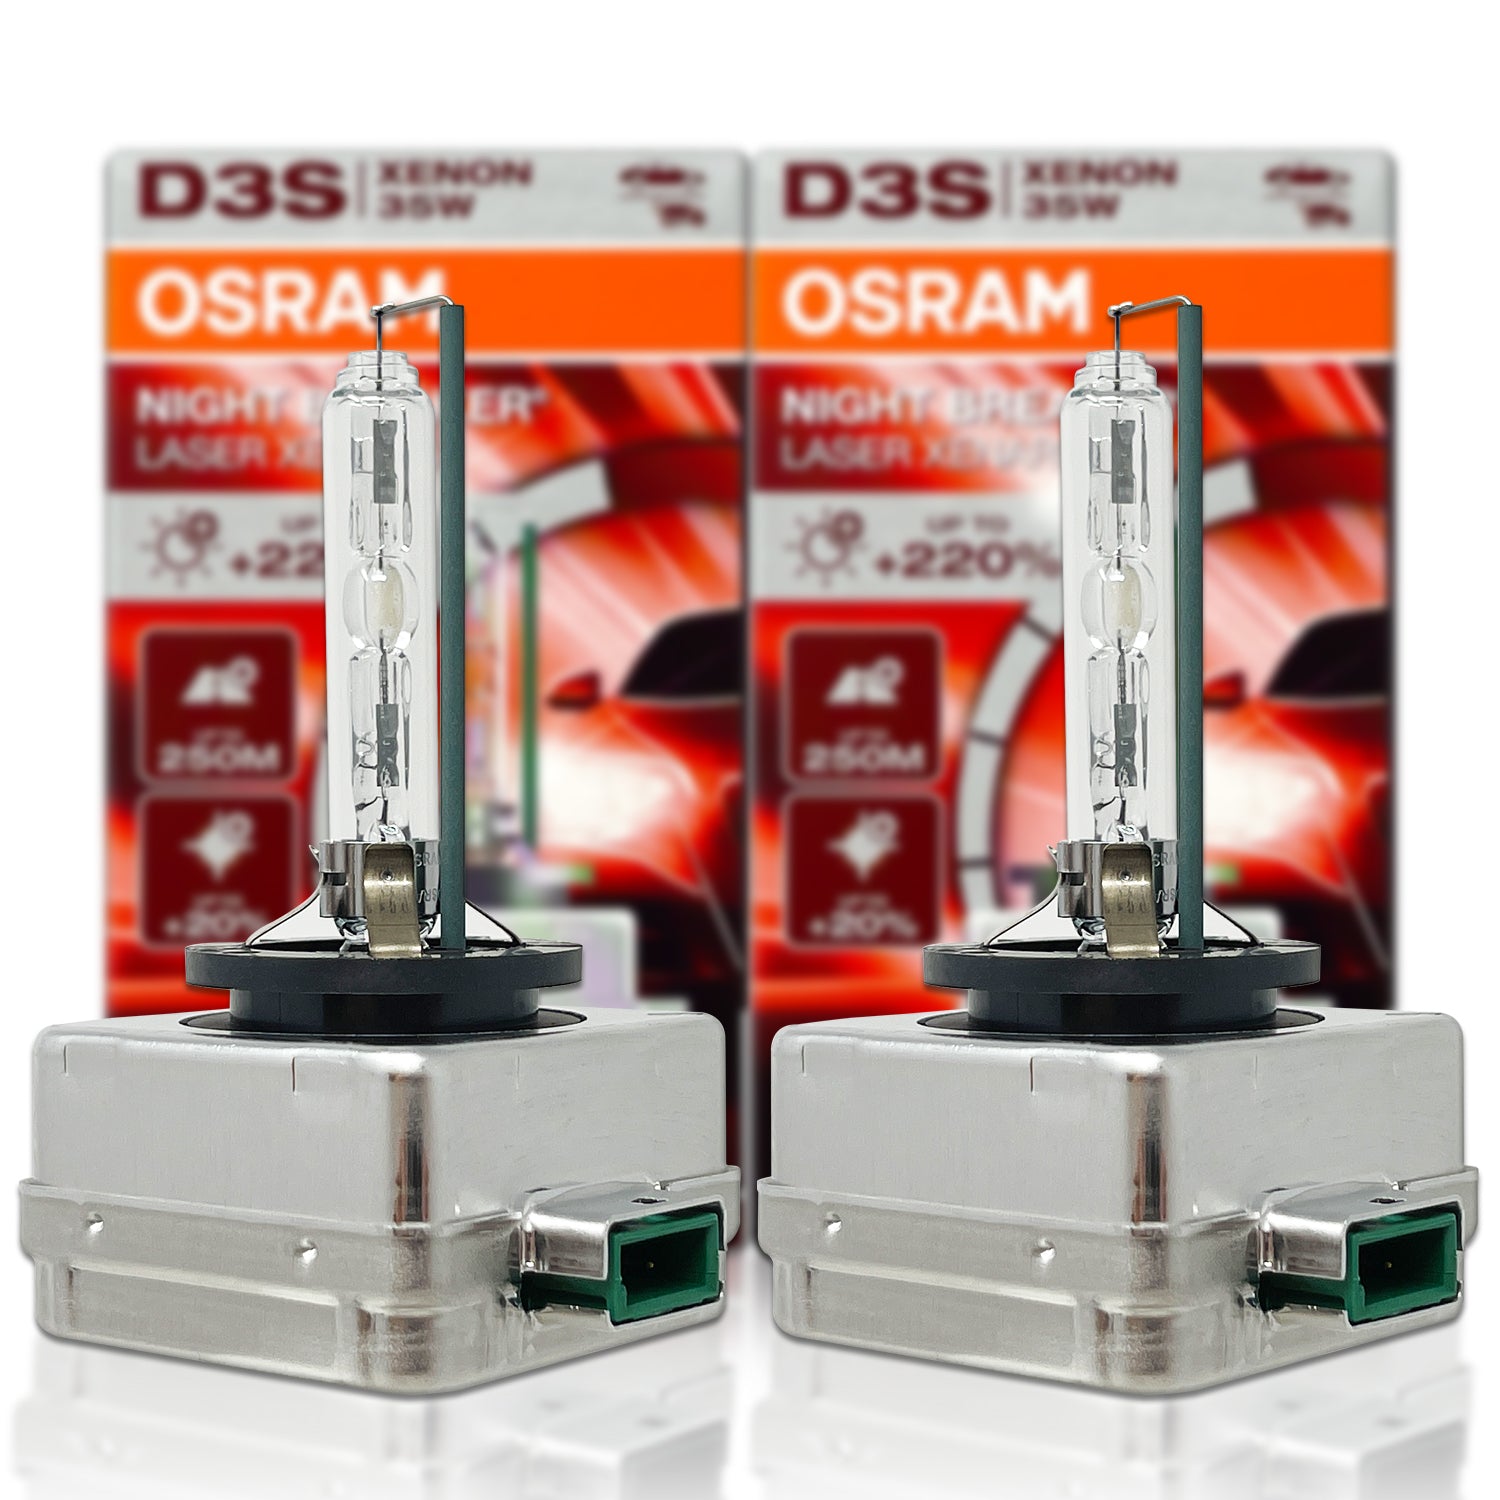 OSRAM Night Breaker XENON HID D2S bulbs